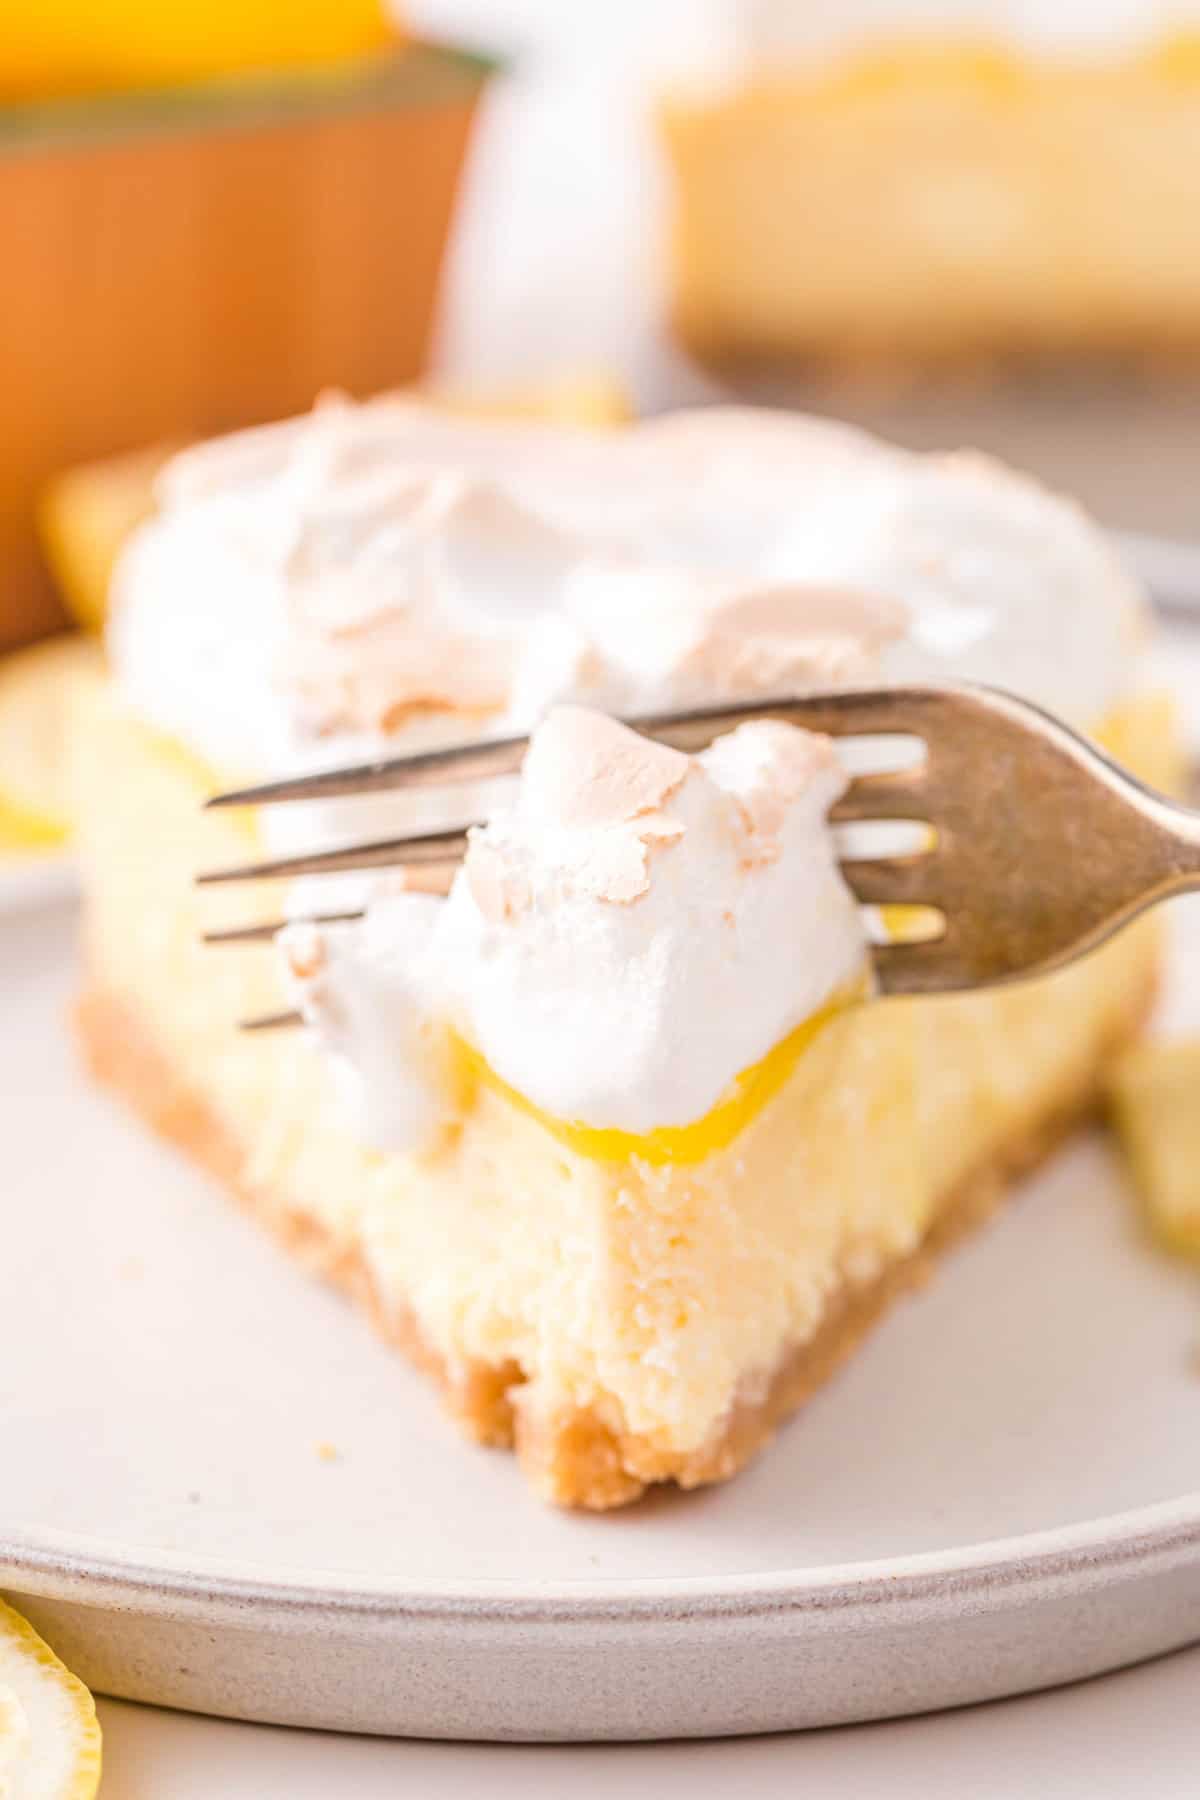 Tart, Tangy, and Creamy Lemon Meringue Cheesecake Recipe on Plate